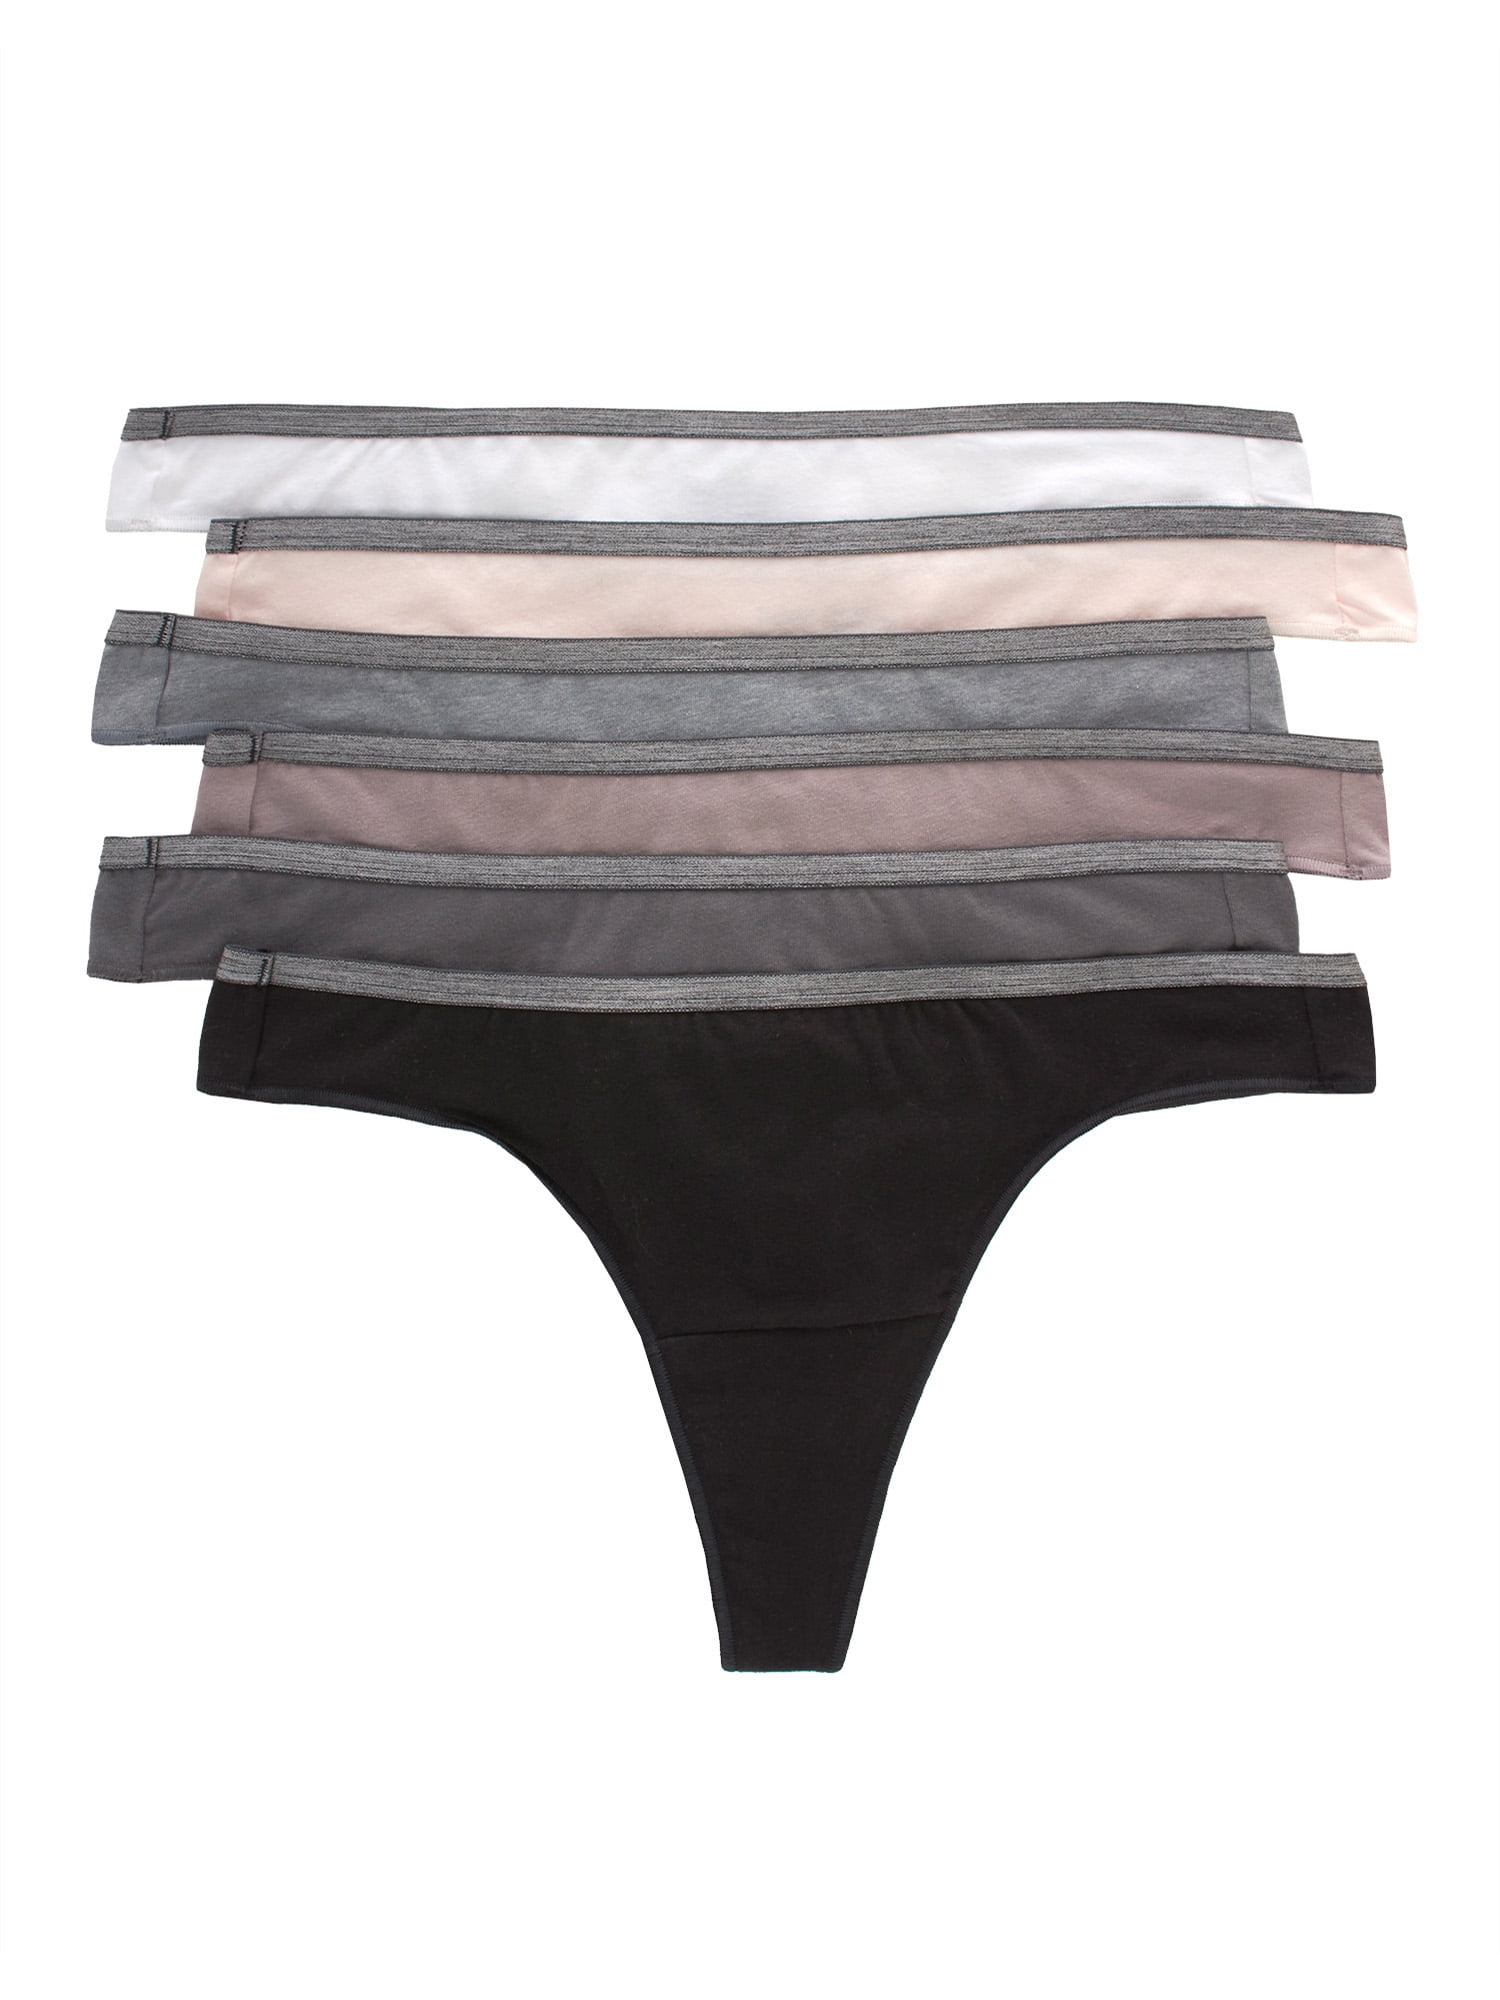 Hanes Women's Cool Comfort Cotton Stretch Thong Underwear, 6-Pack